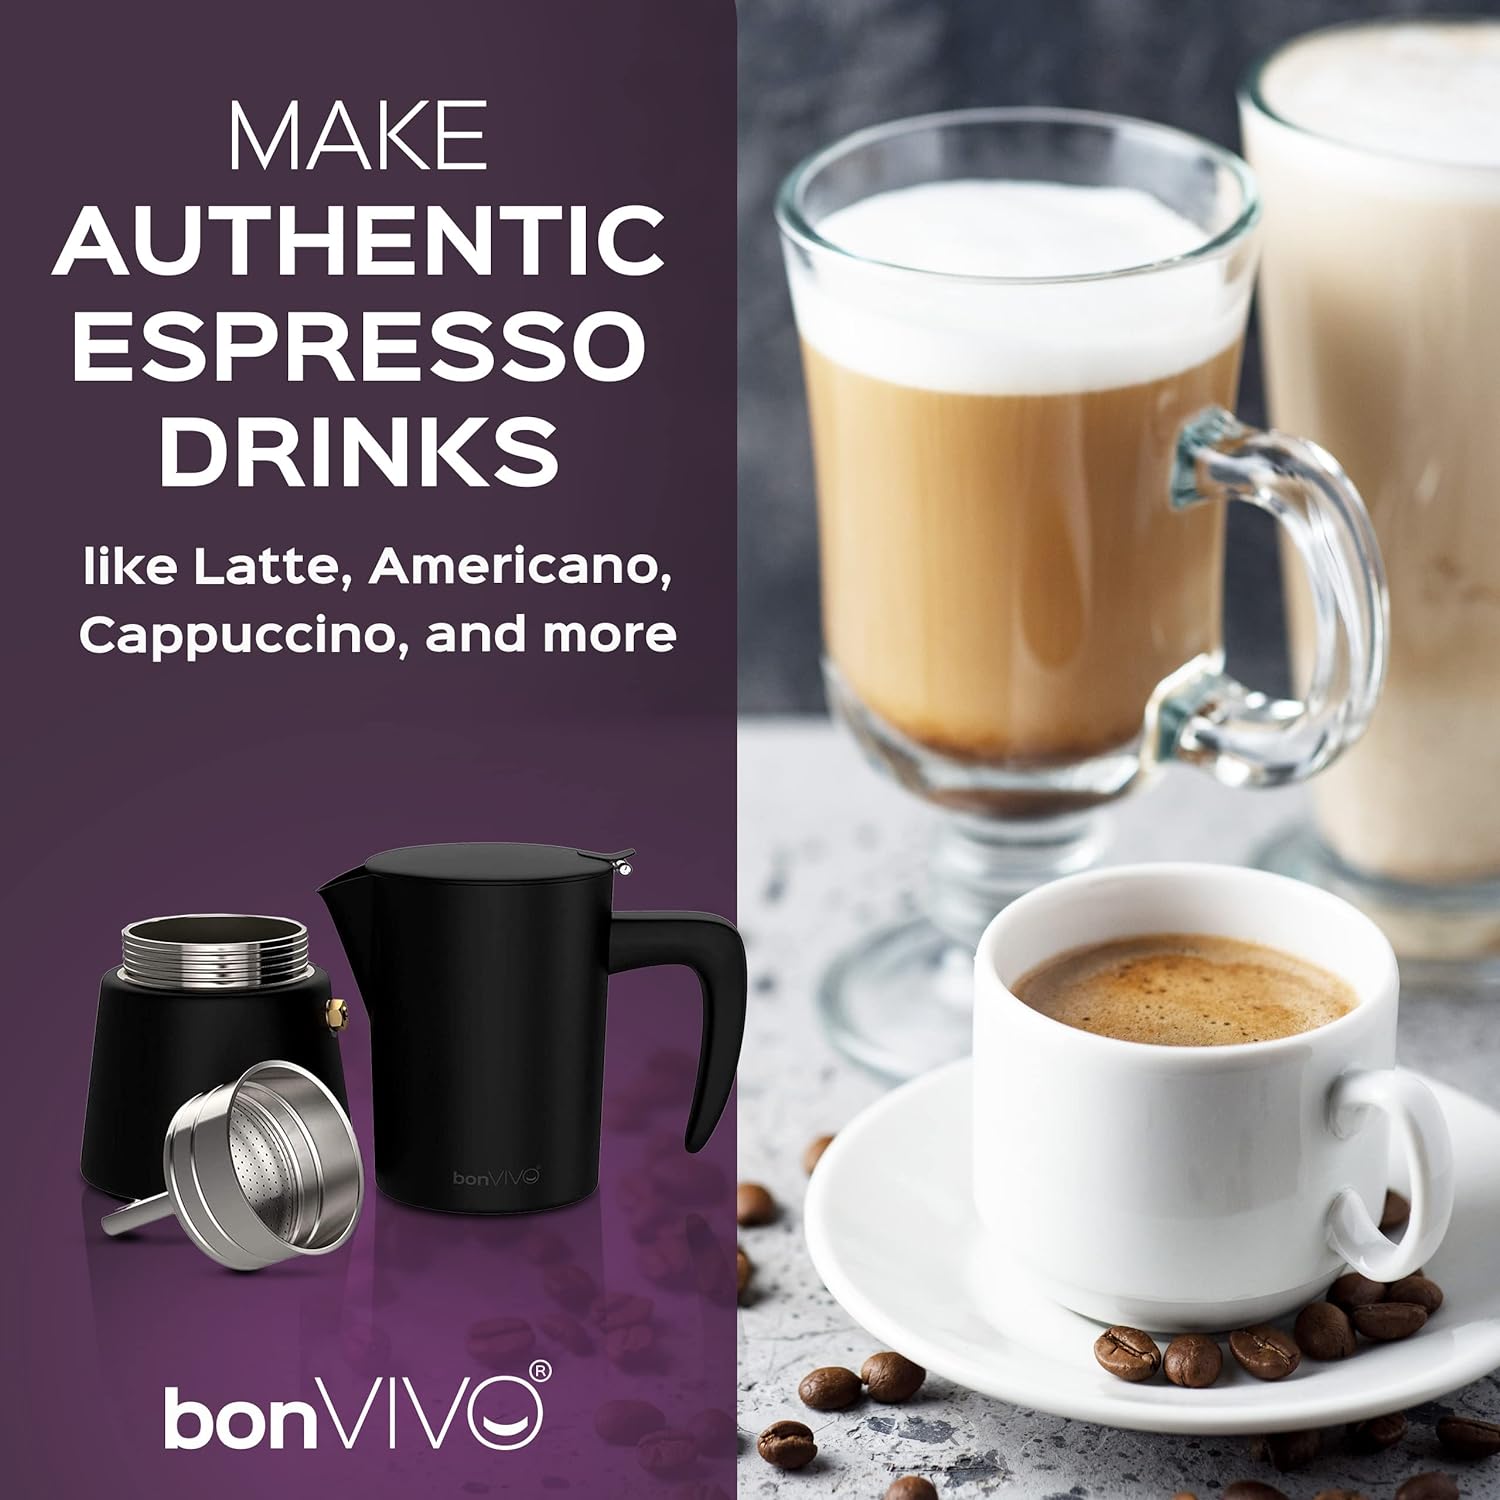 bonVIVO Intenca Stovetop Espresso Maker - Luxurious Italian Coffee Machine Maker, Stainless Steel Espresso Maker Full Bodied Coffee, Espresso Pot For 5-6 Cups, 10 oz Moka Pot Red Finish